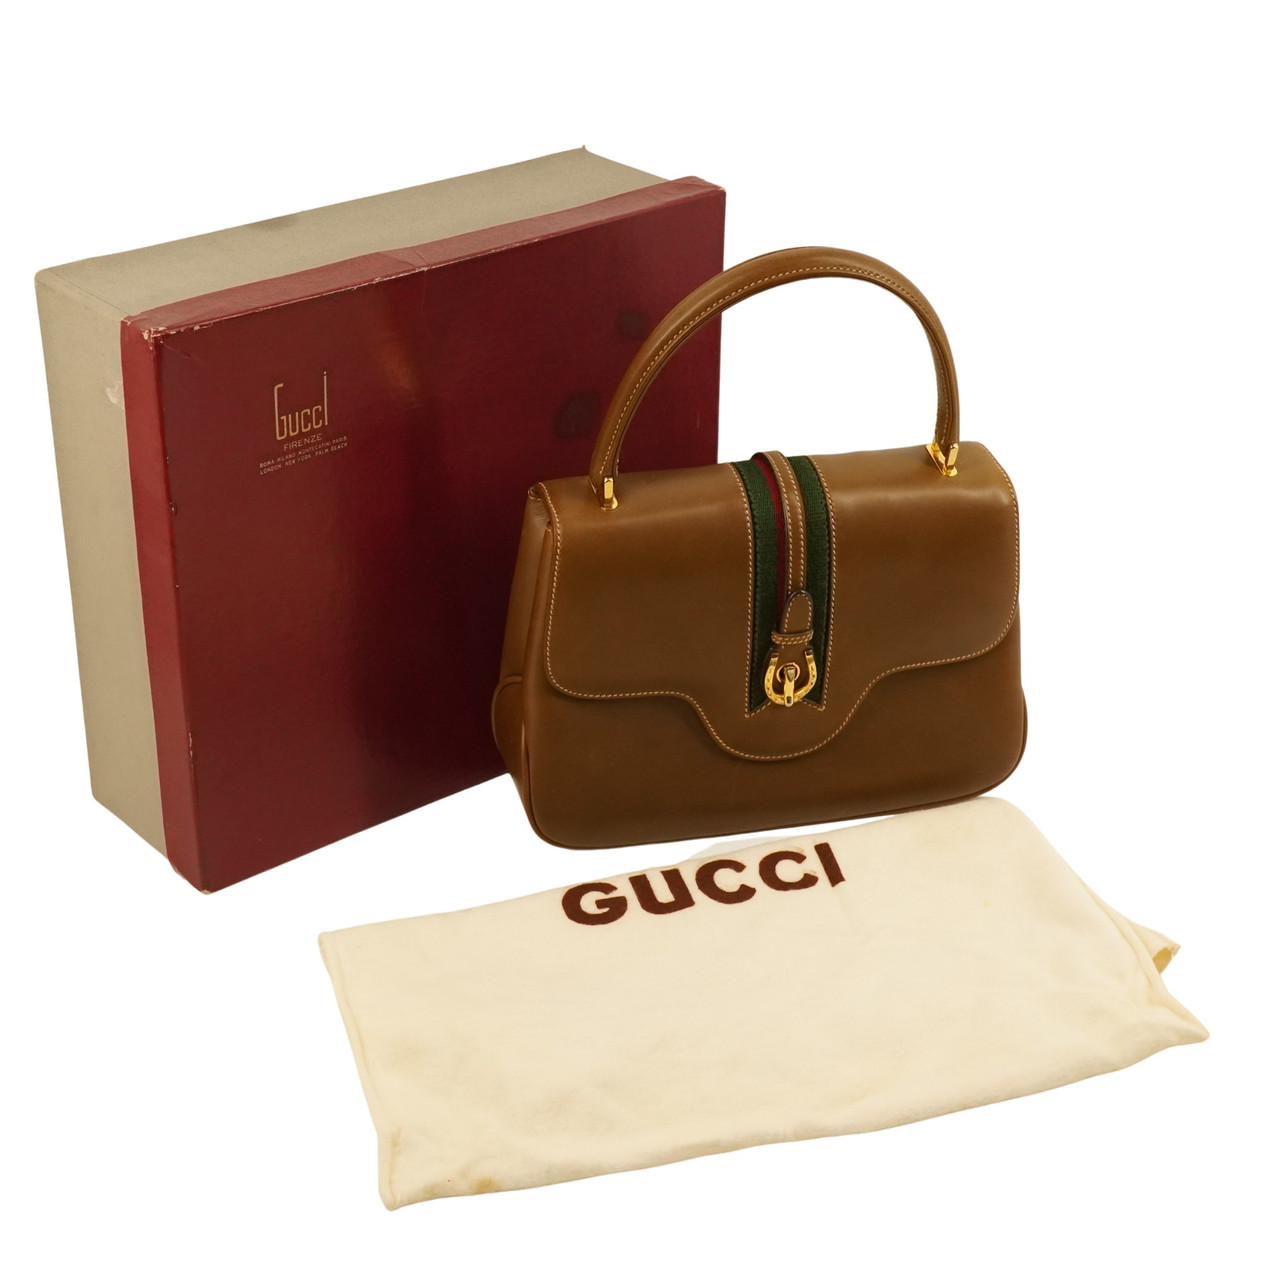 Gucci USA GG flag collection boston bag | Gucci shoulder bag, Gucci bags  outlet, Gucci bag